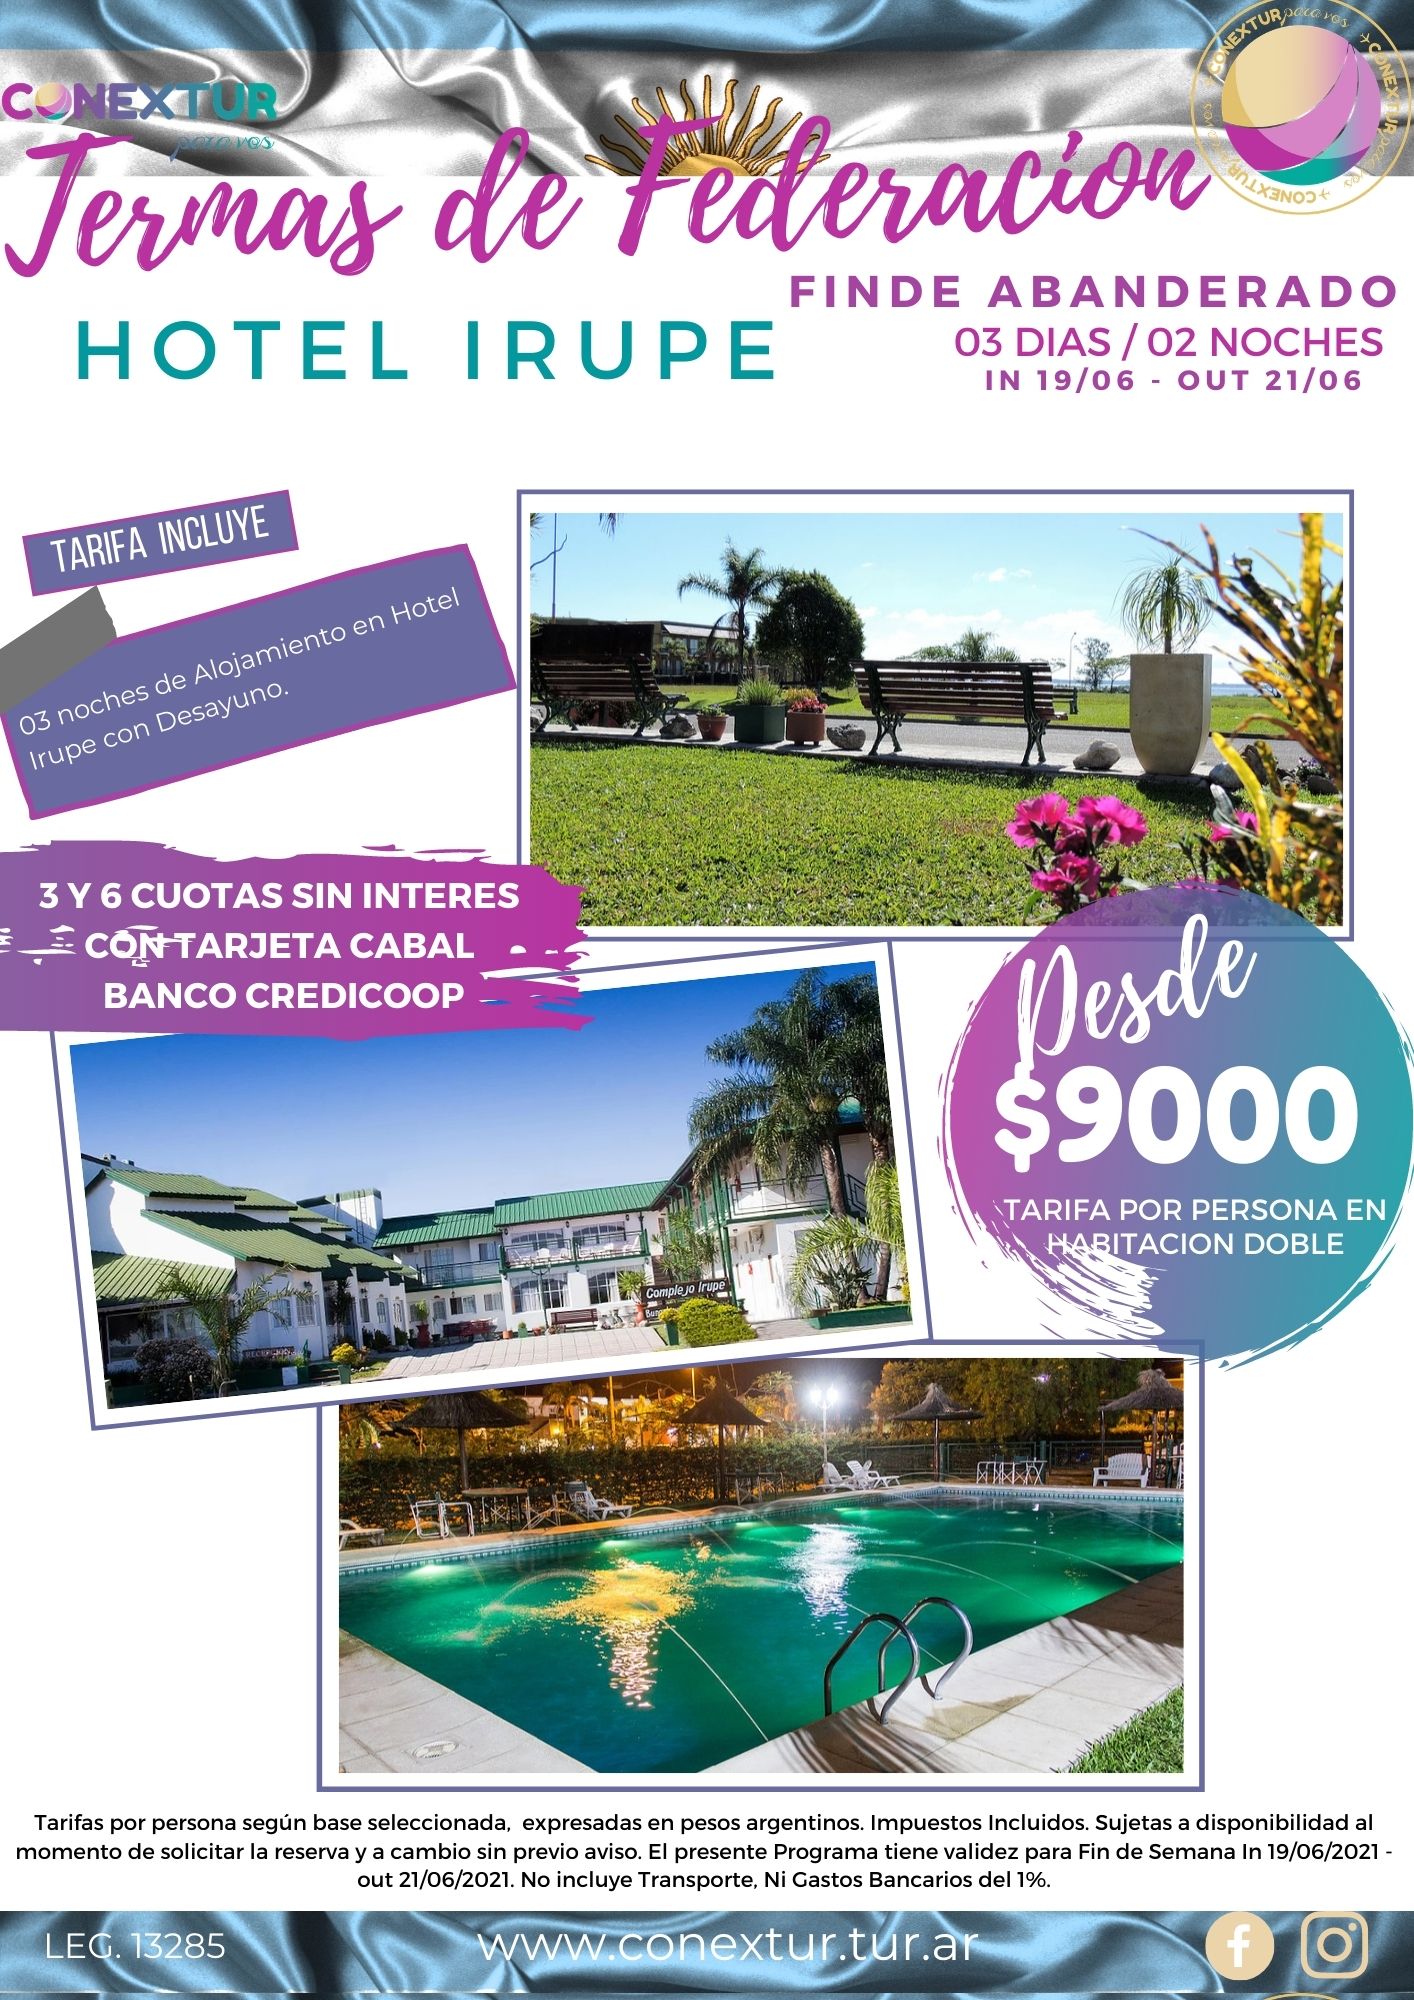 Hotel Irupe - Termas de Federacion